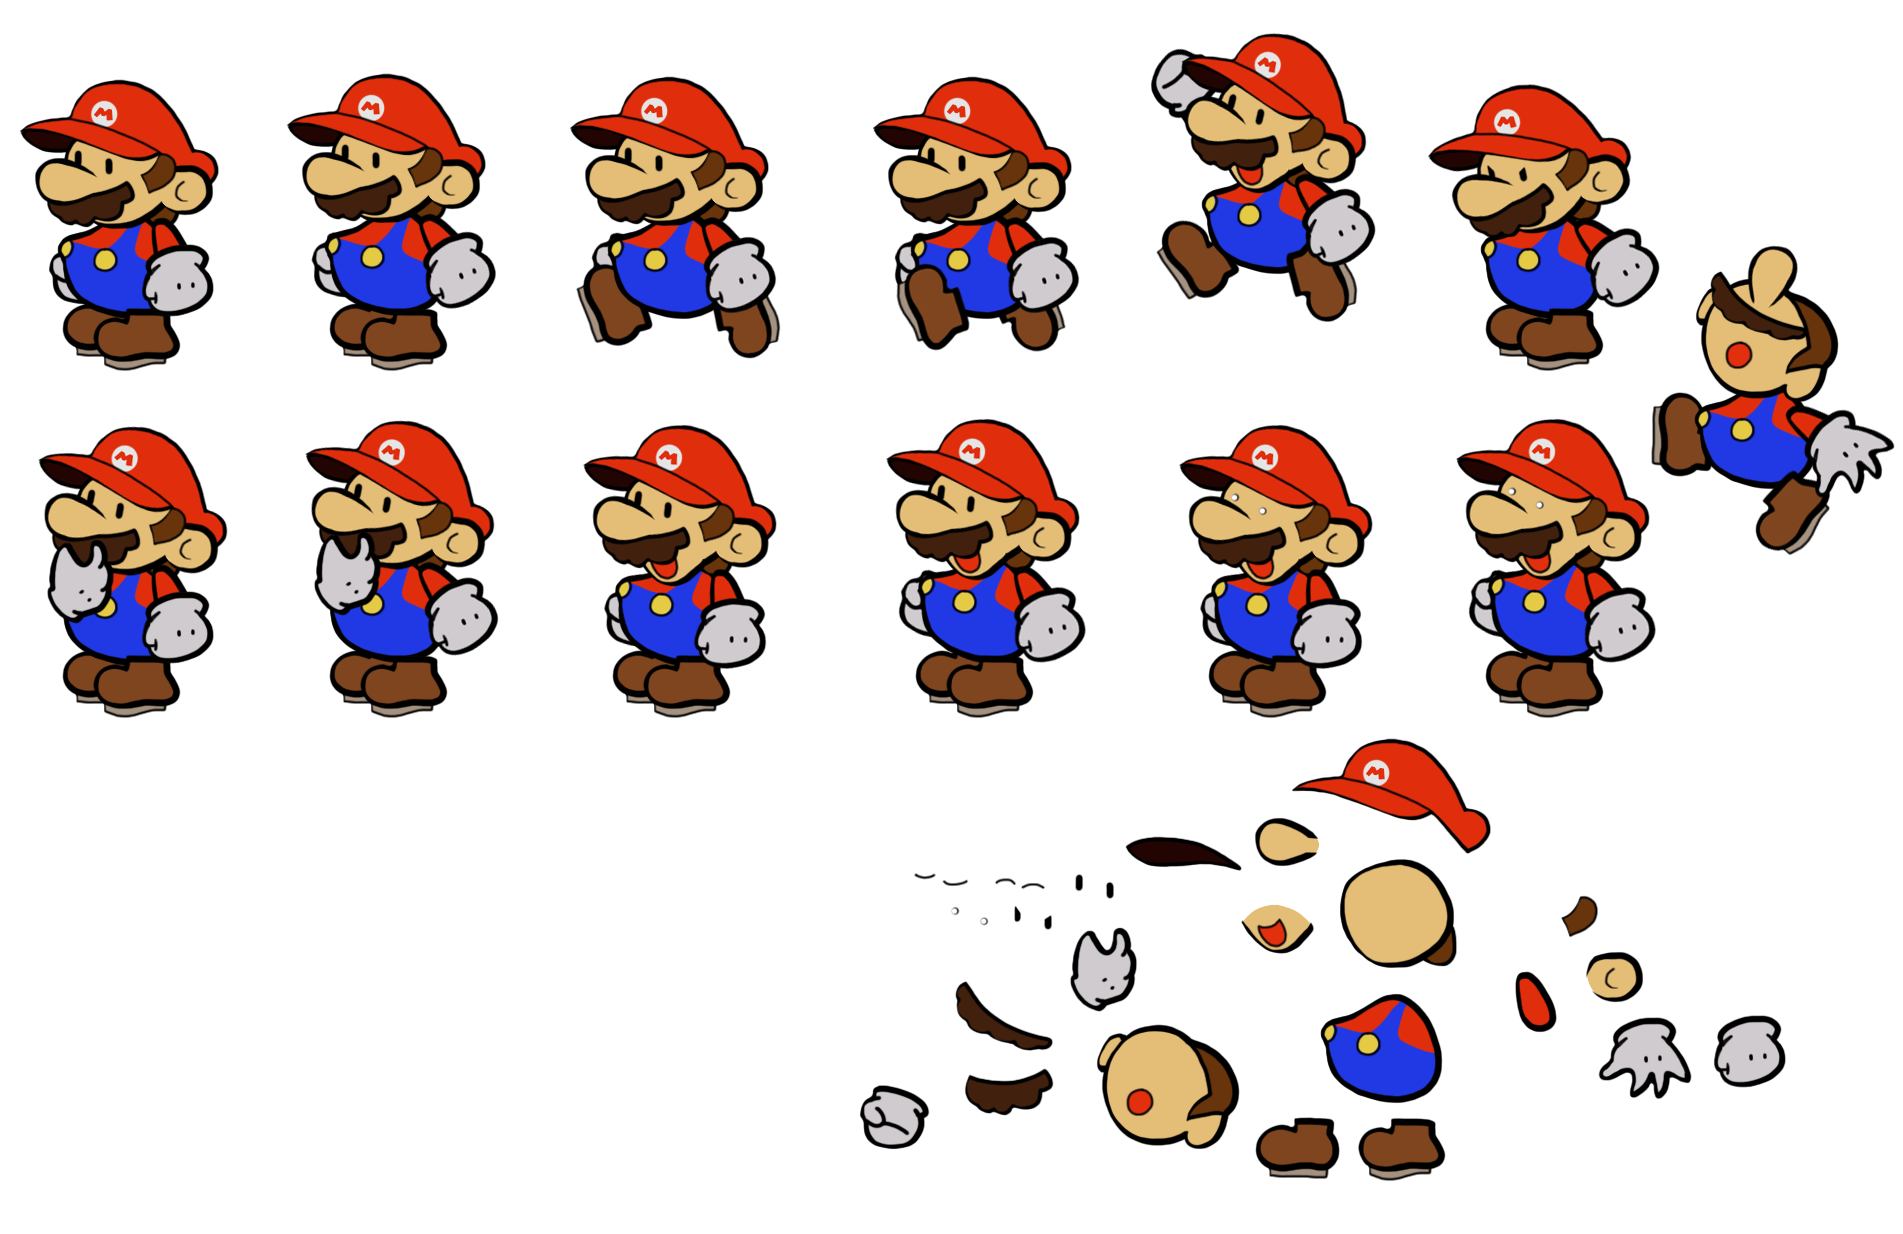 Super mario sprites. Герои Марио Sprite. Марио персонаж спрайт. Спрайты для Марио 2d. Спрайт лист для игры Марио.